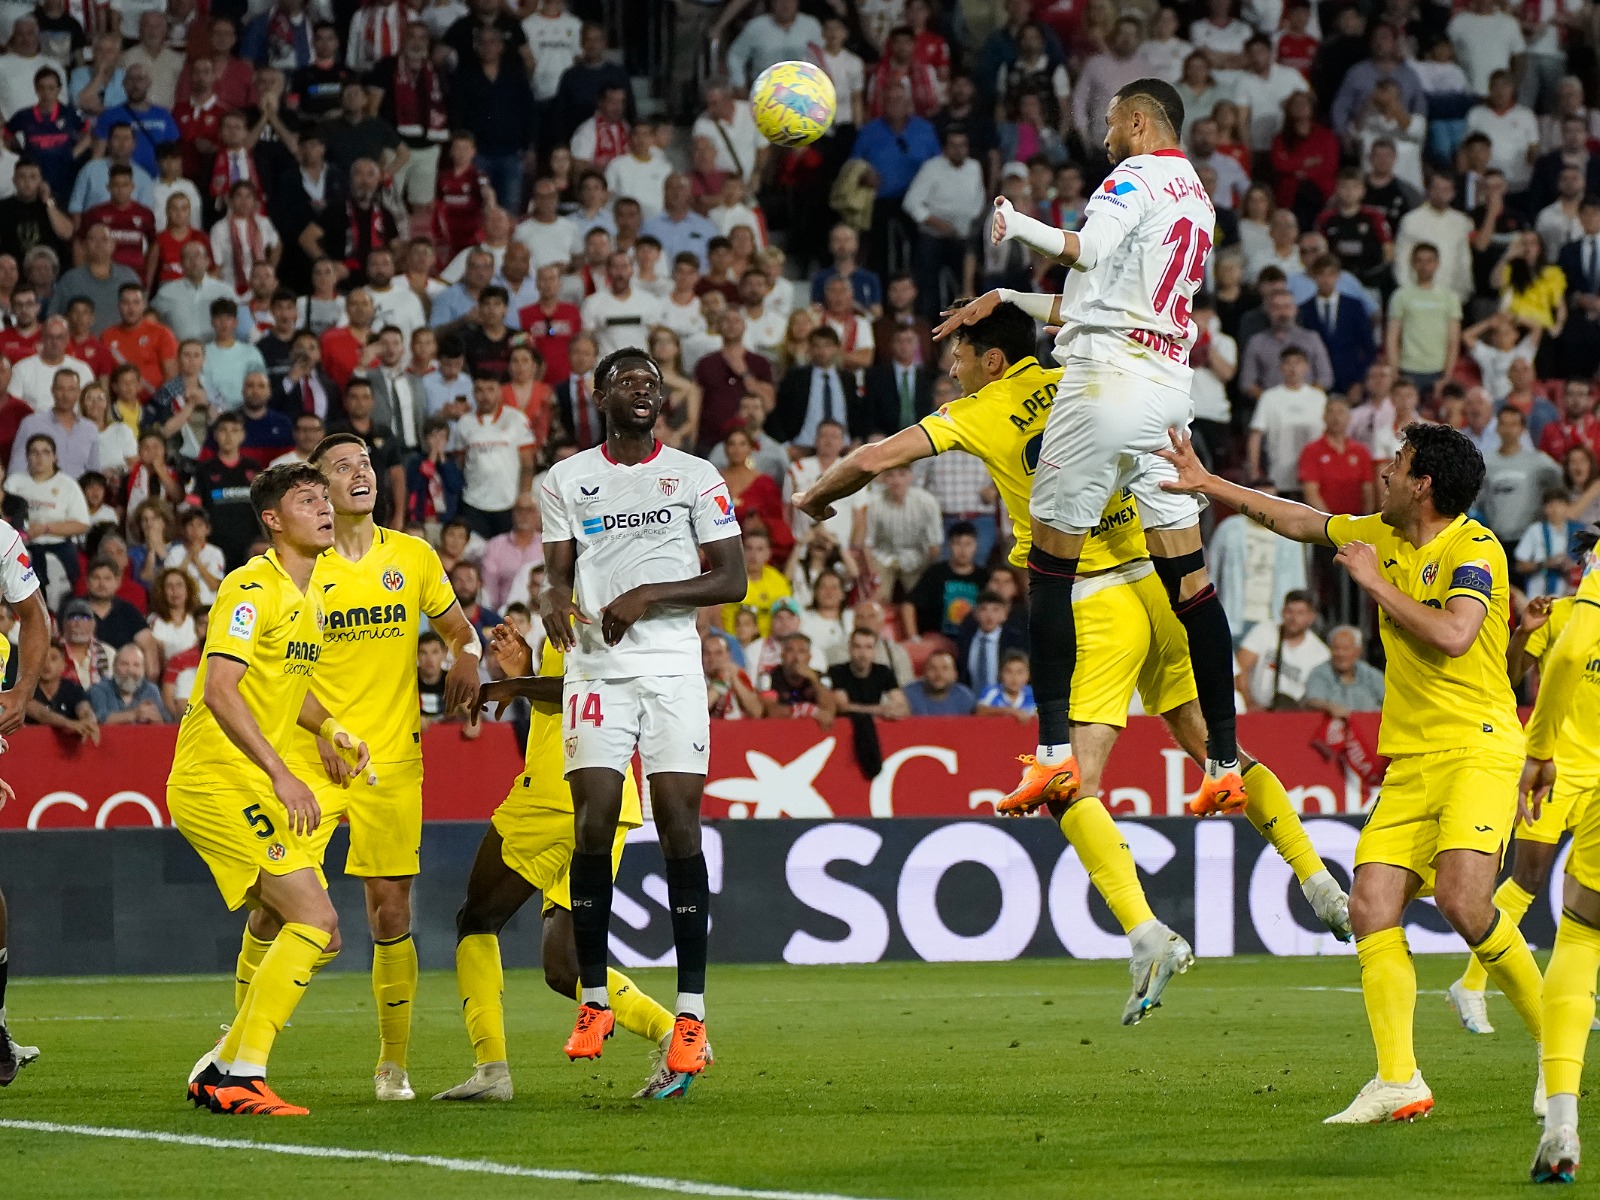 EN-Nesyri goal against Villarreal